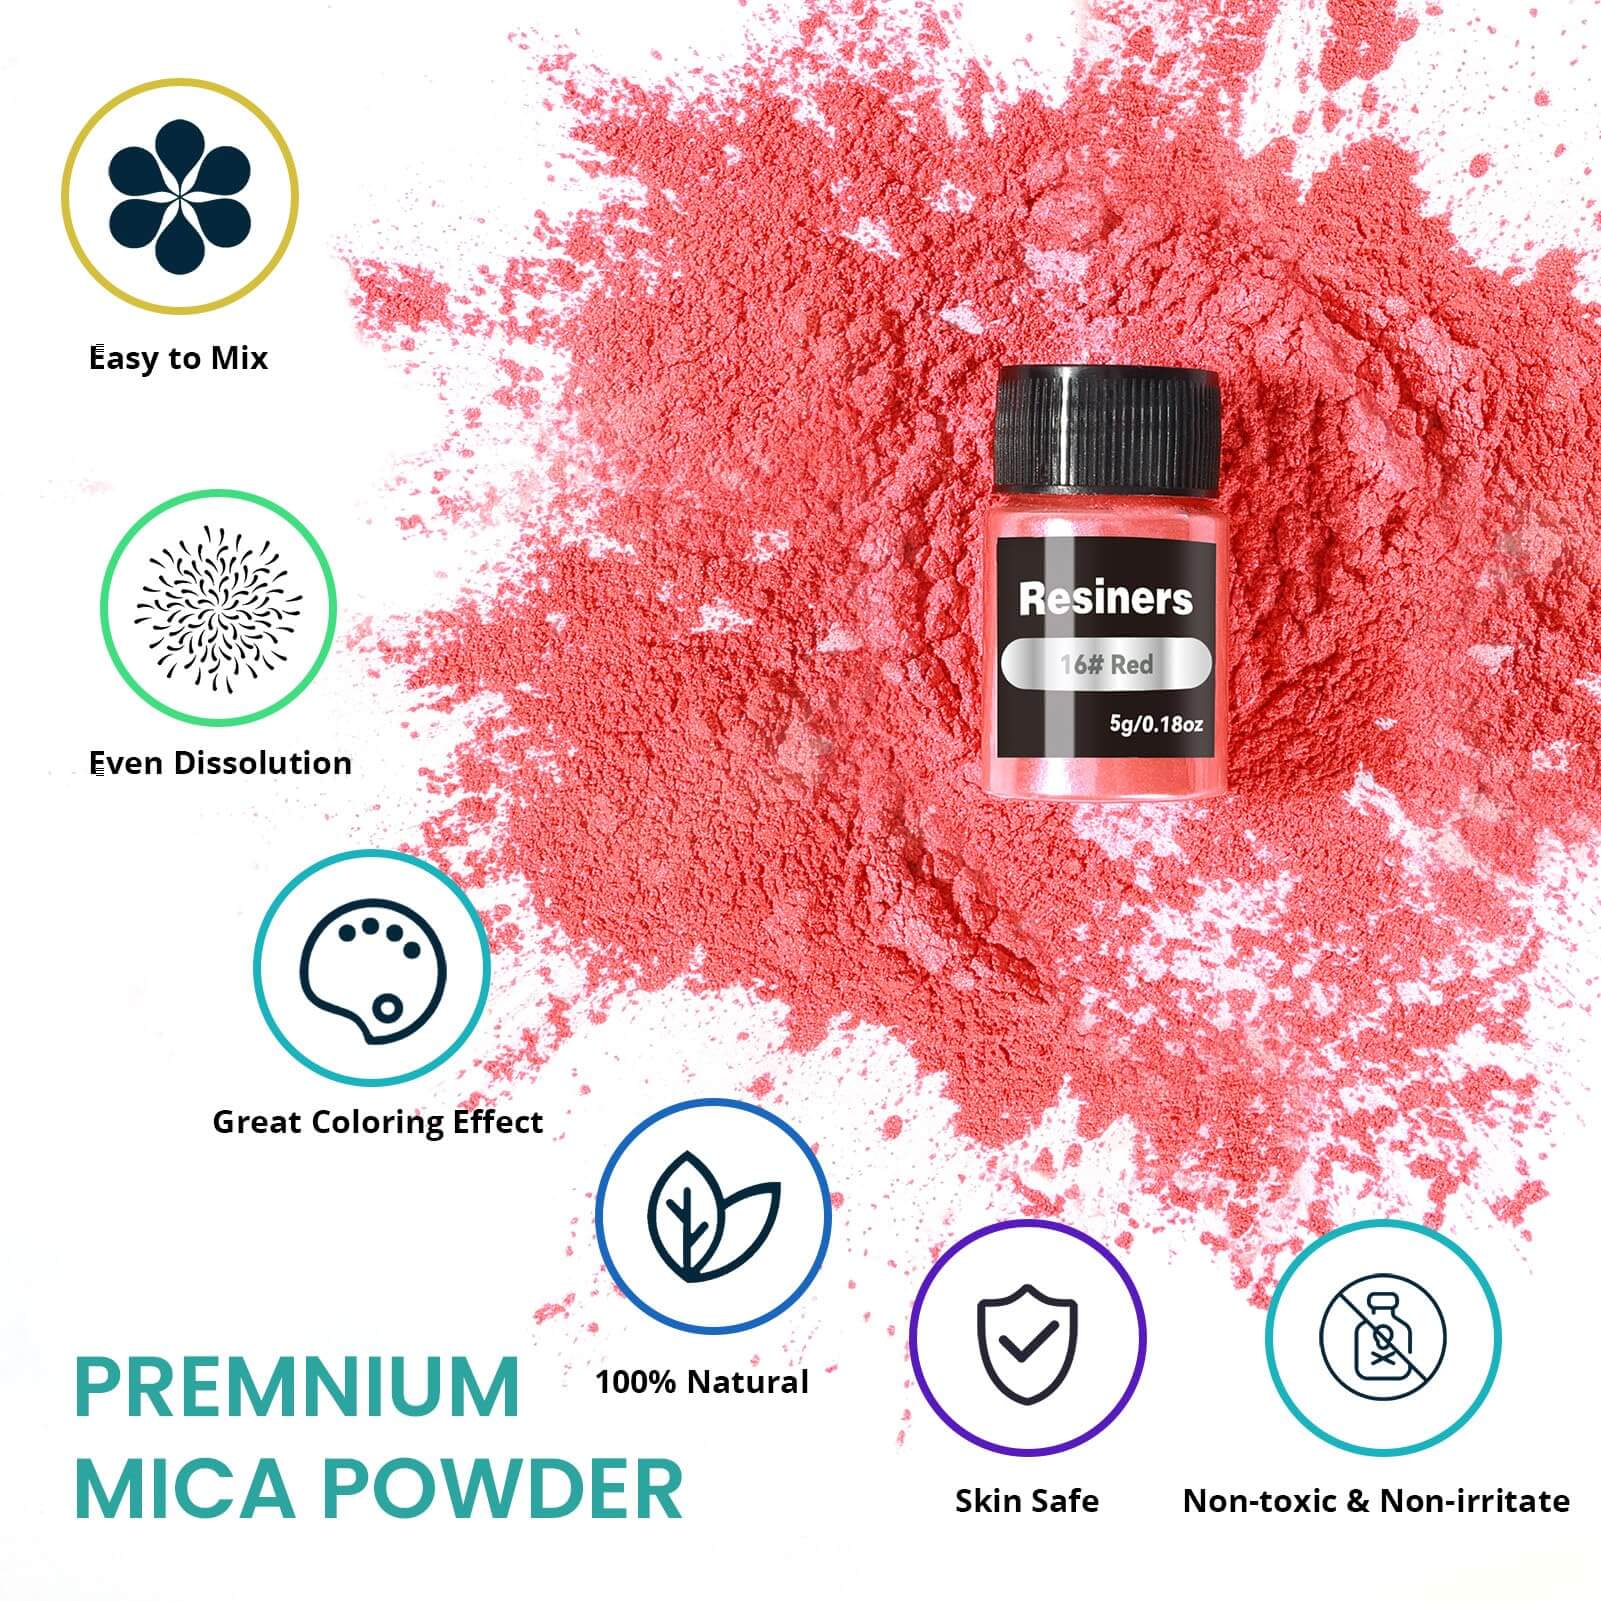 Resiners® 26 Colors Mica Powder Set - 0.175oz(5g)/Bottle